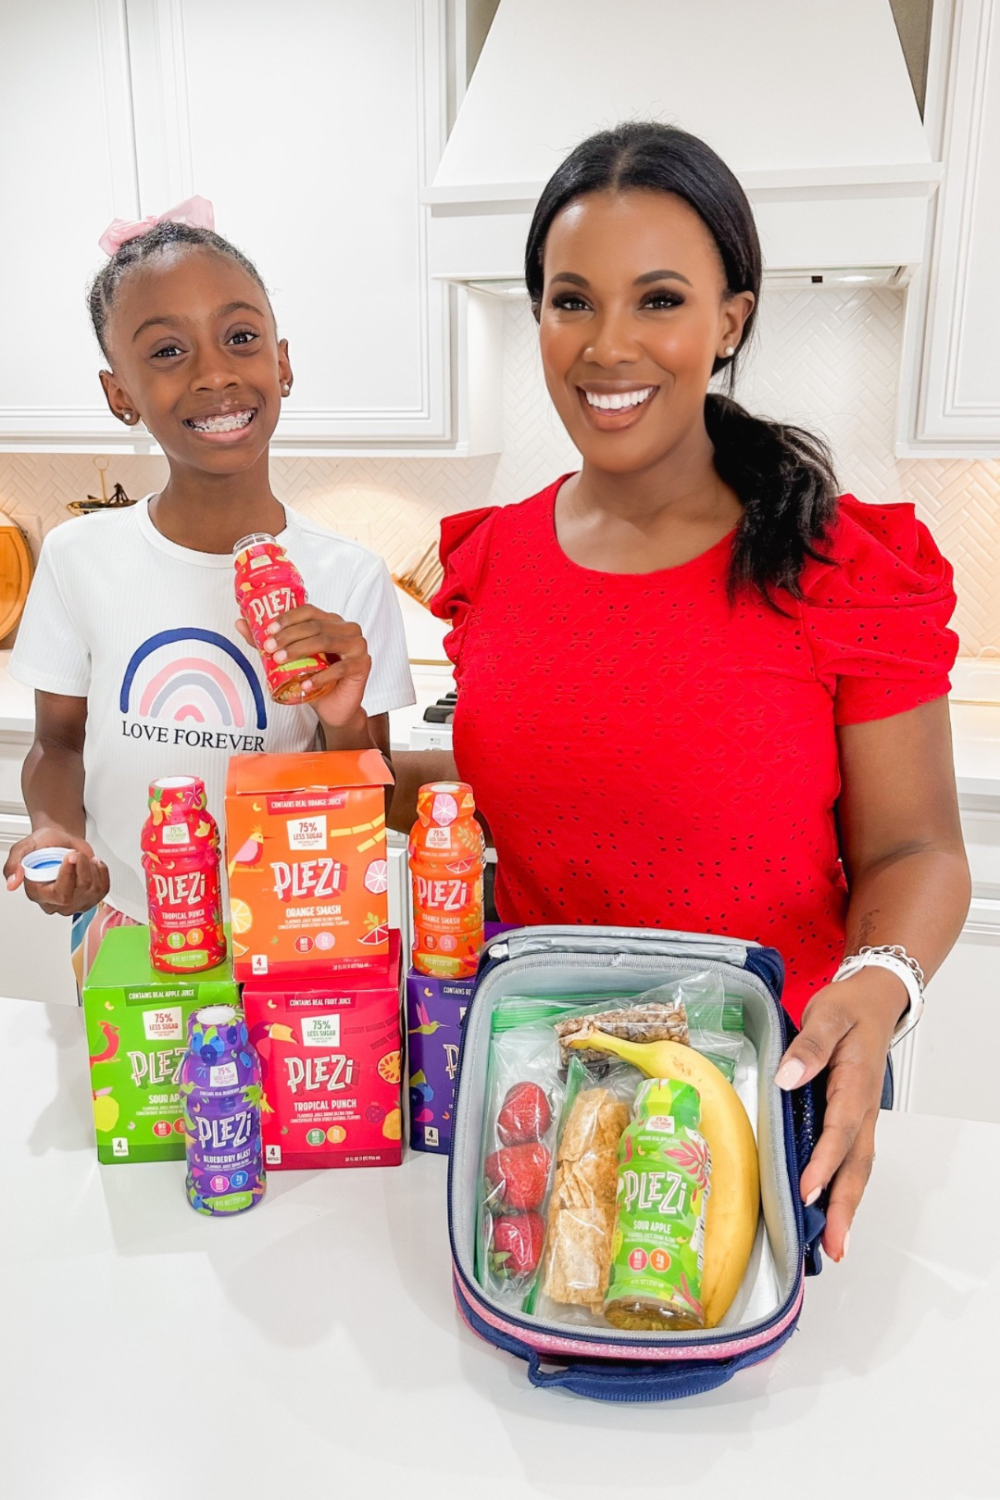 PLEZi Nutrition: Happy and Healthy Kids